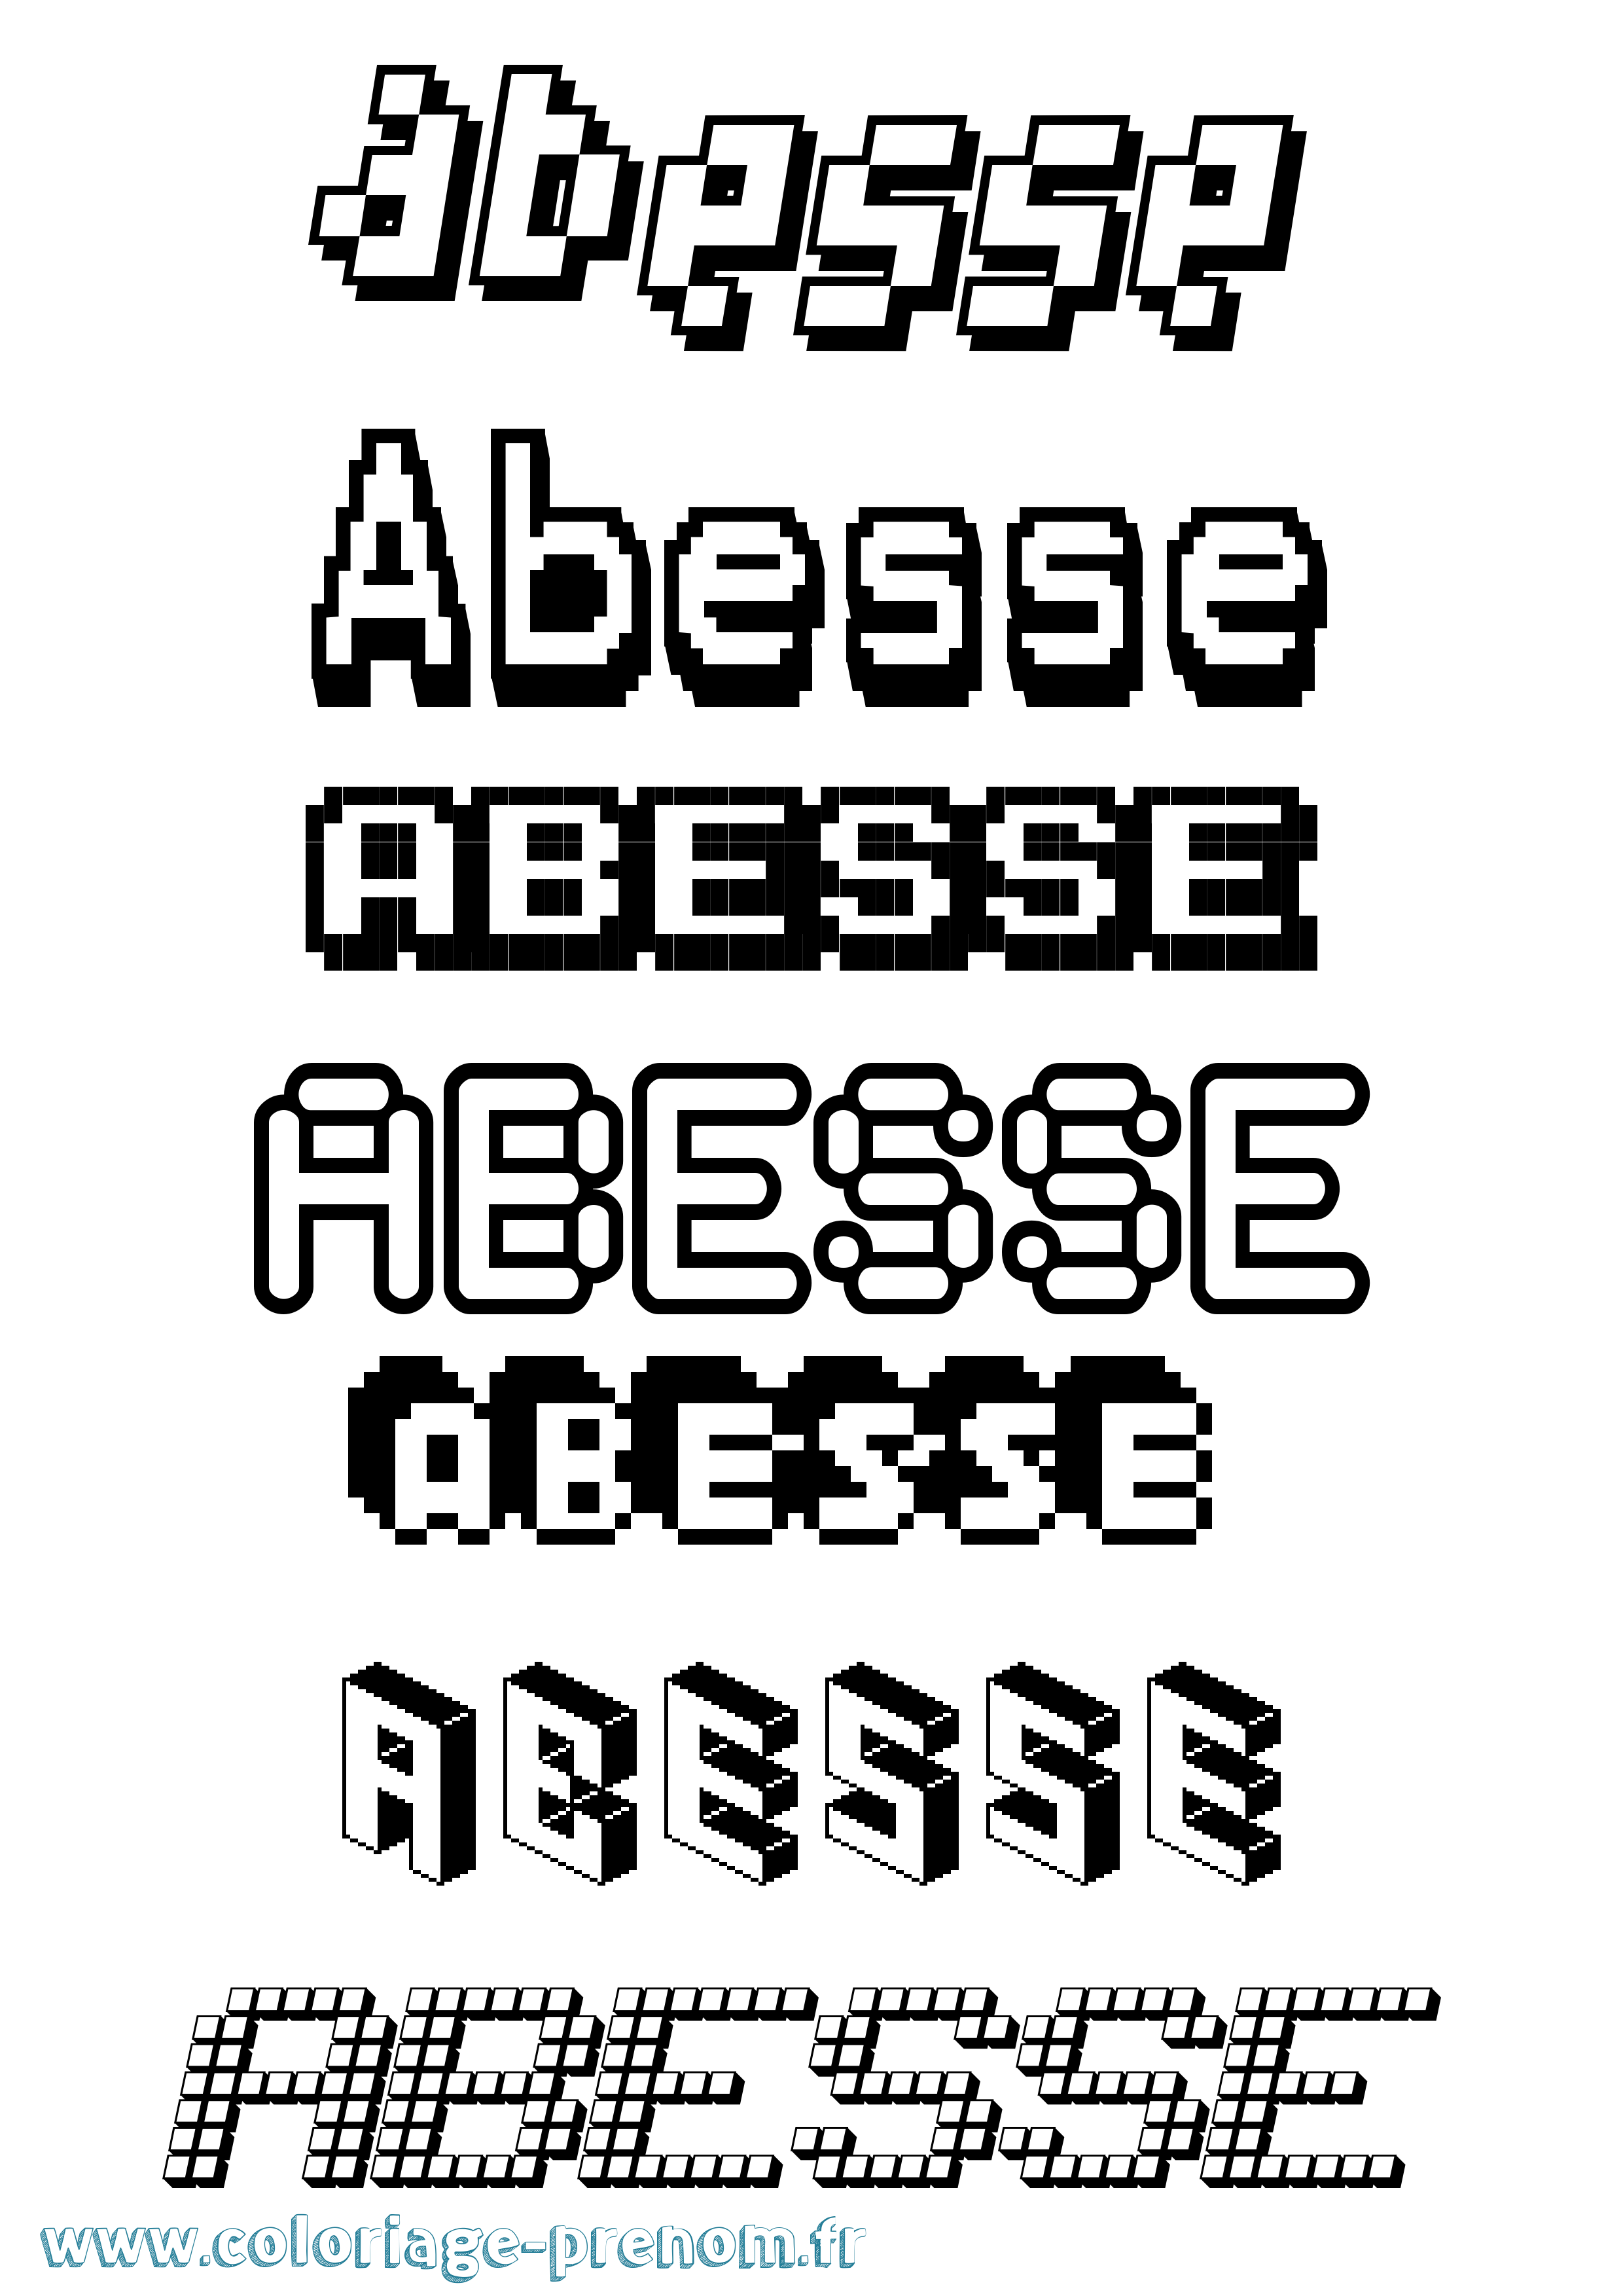 Coloriage prénom Abesse Pixel